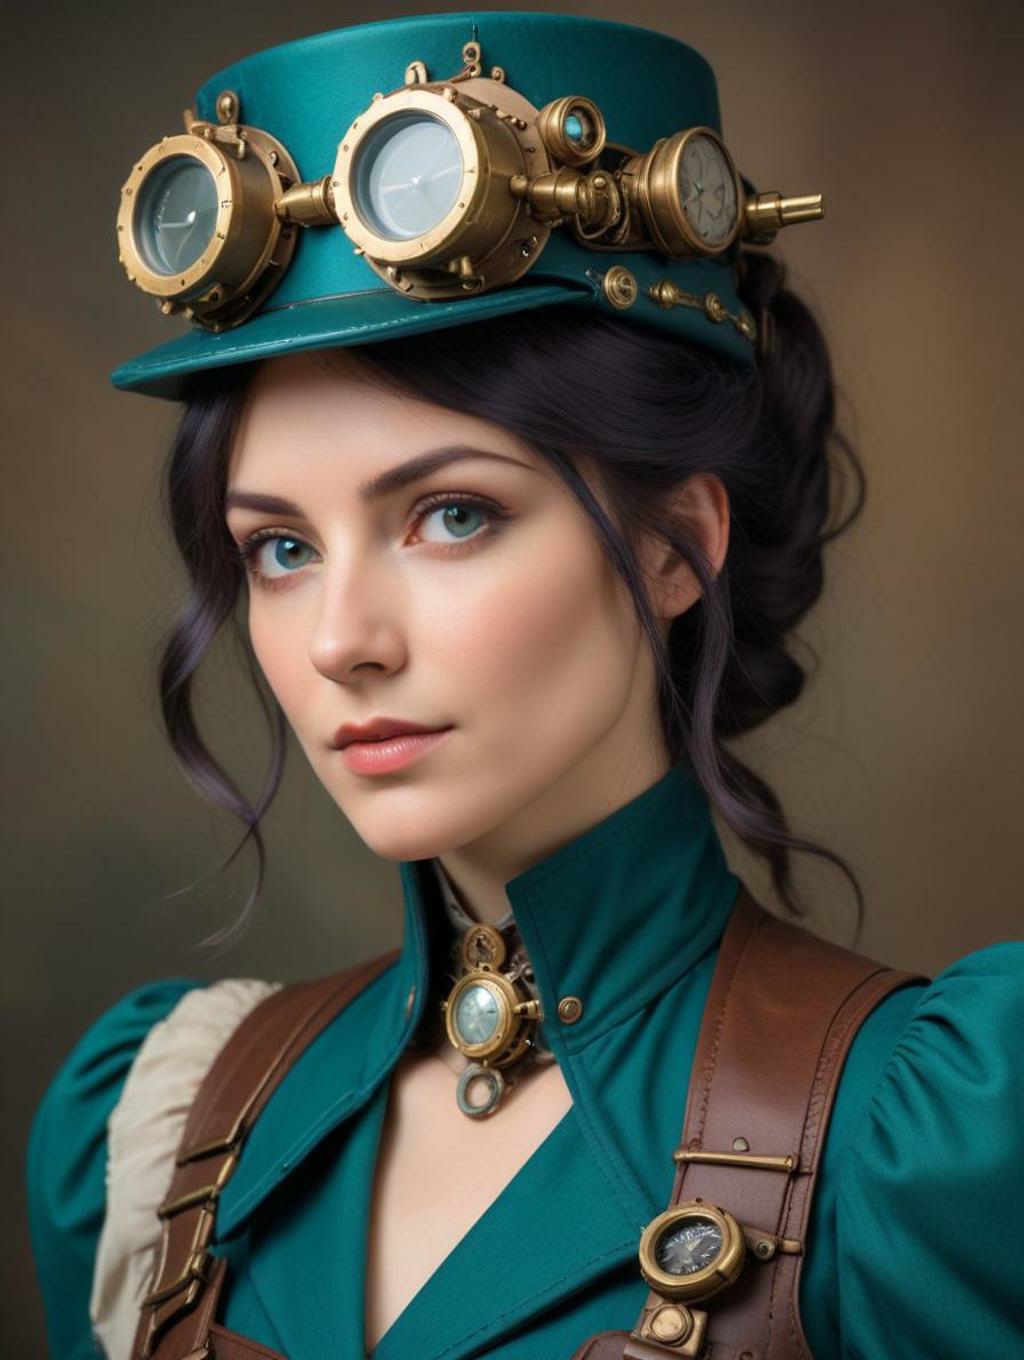 Steampunk Gadget Inventor Women: Image Frames & Art Portraits-Theme:3